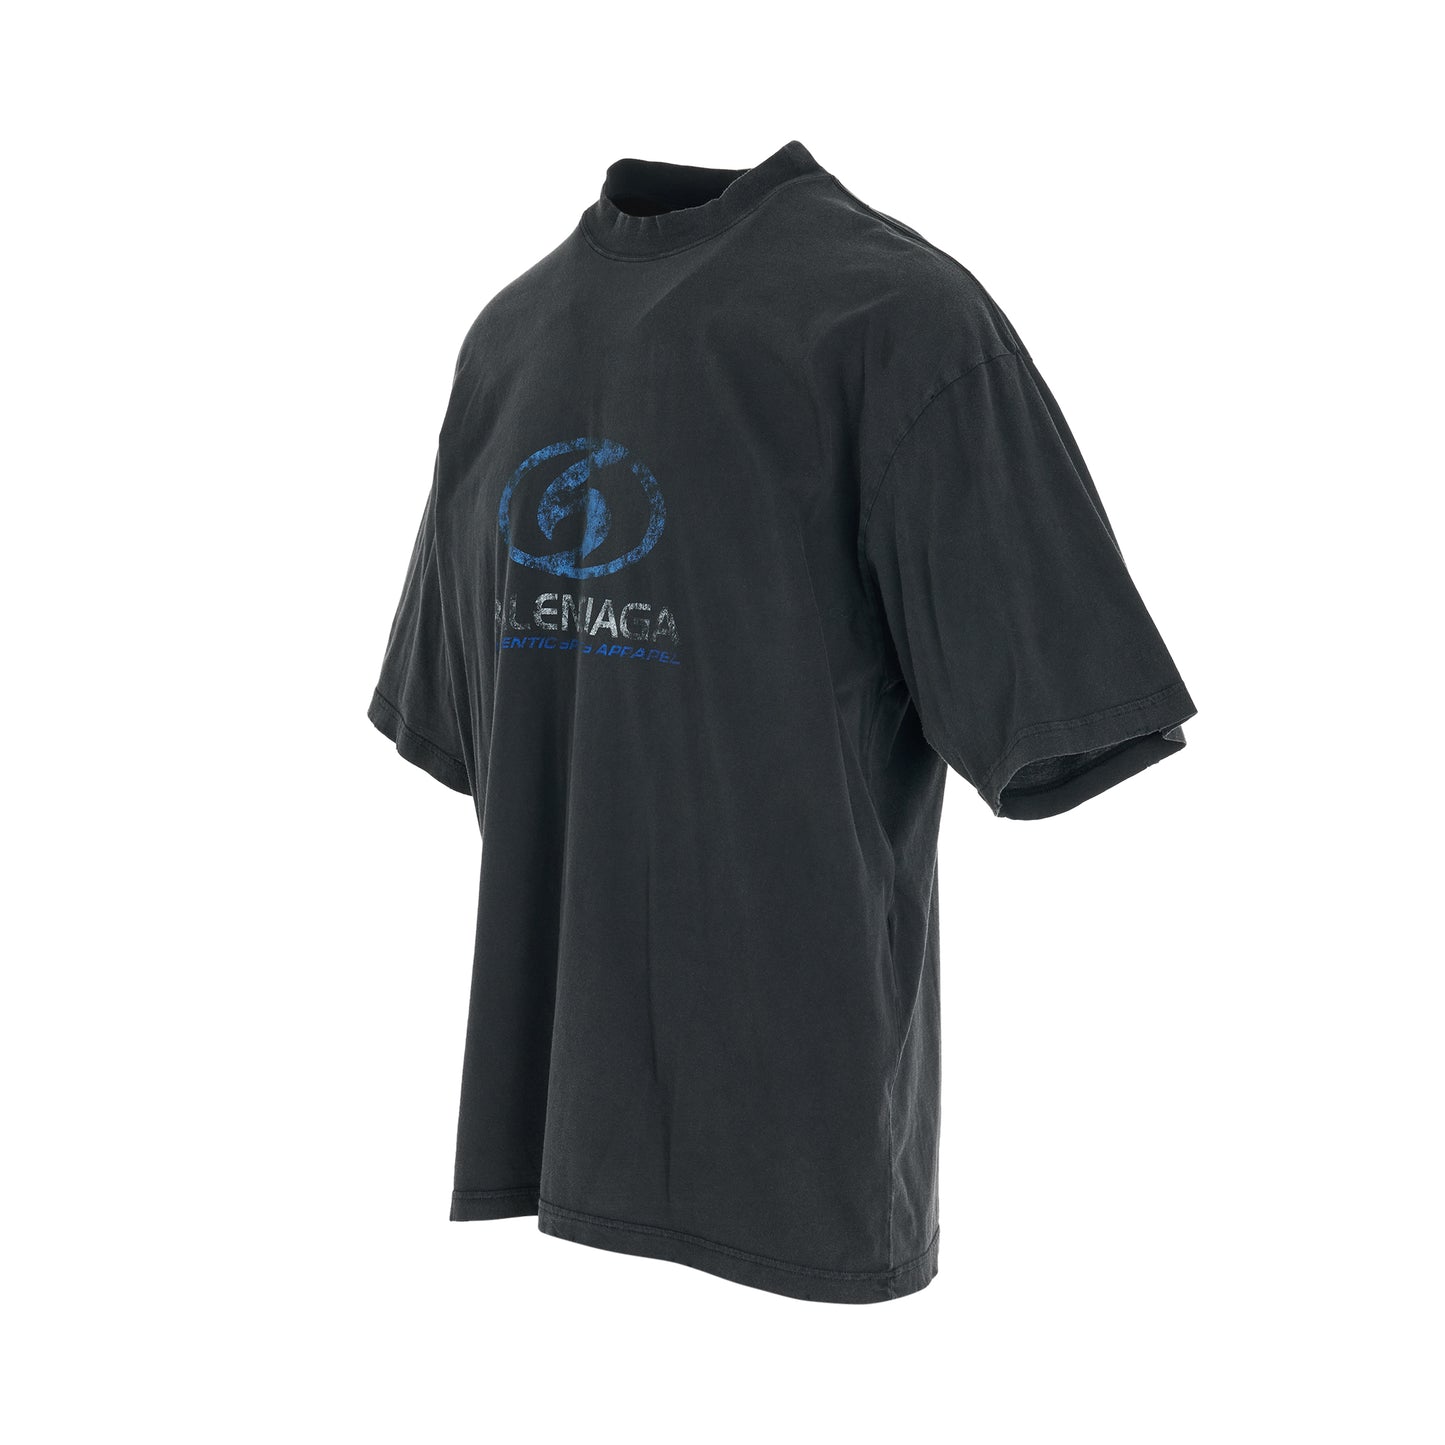 Surfer Logo T-Shirt in Faded Black/Blue